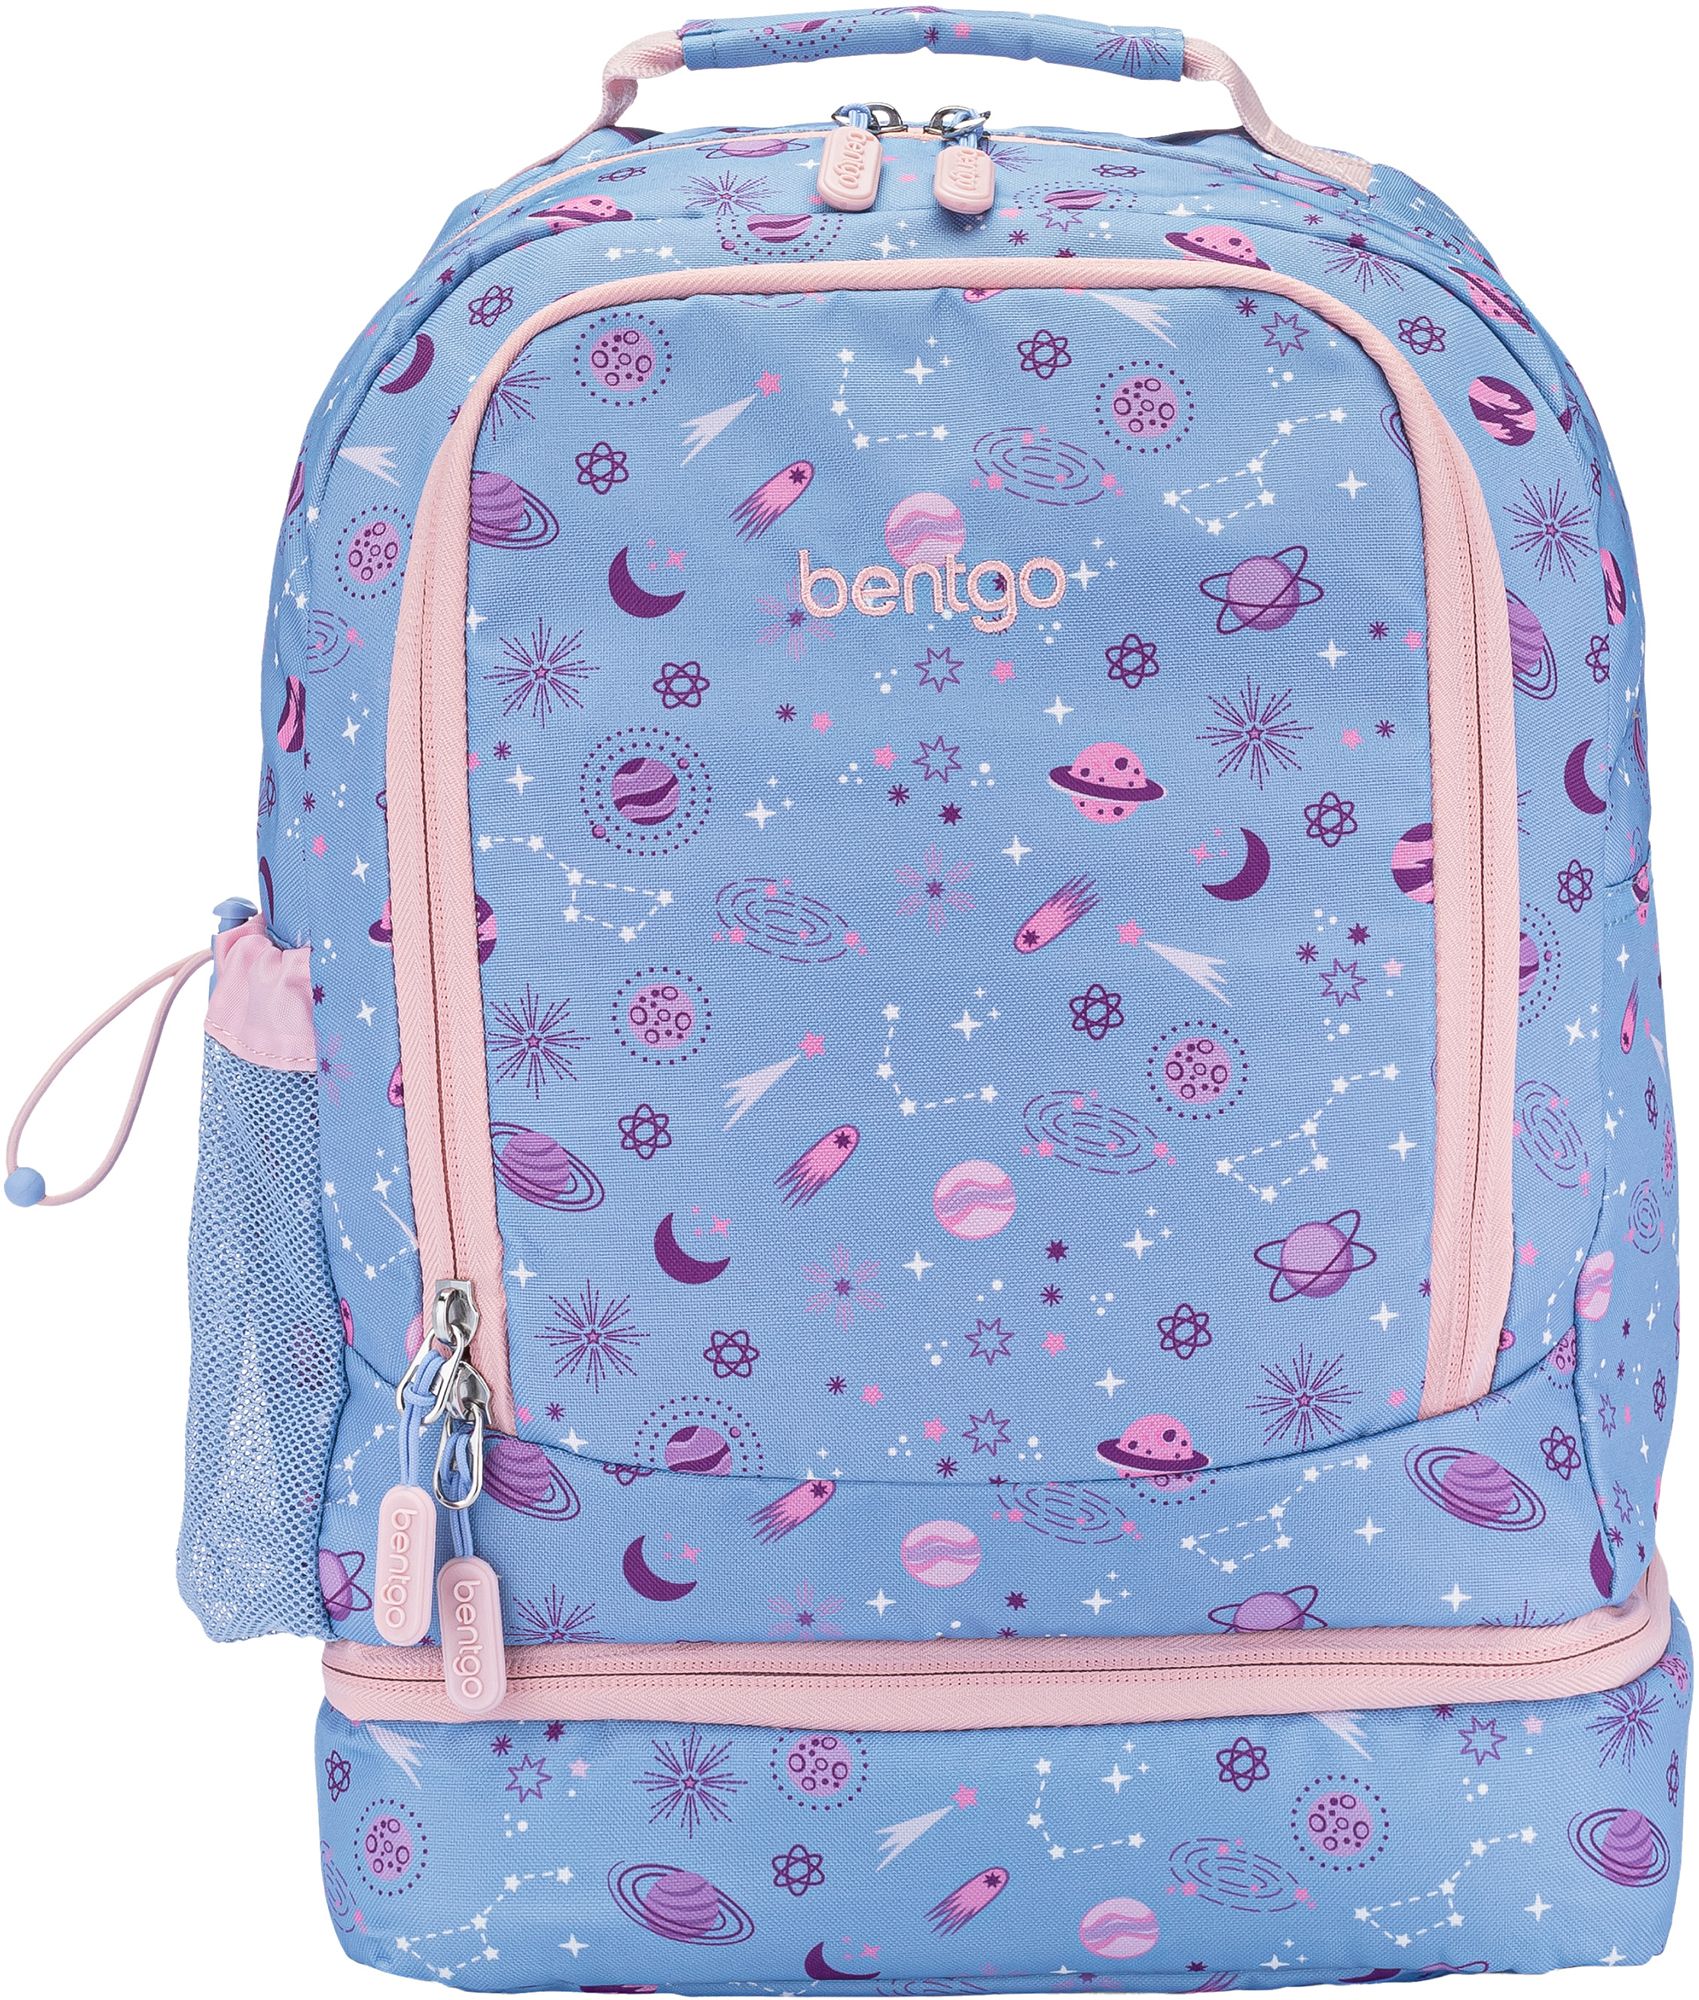 Bentgo Kids Prints 2-in-1 Backpack